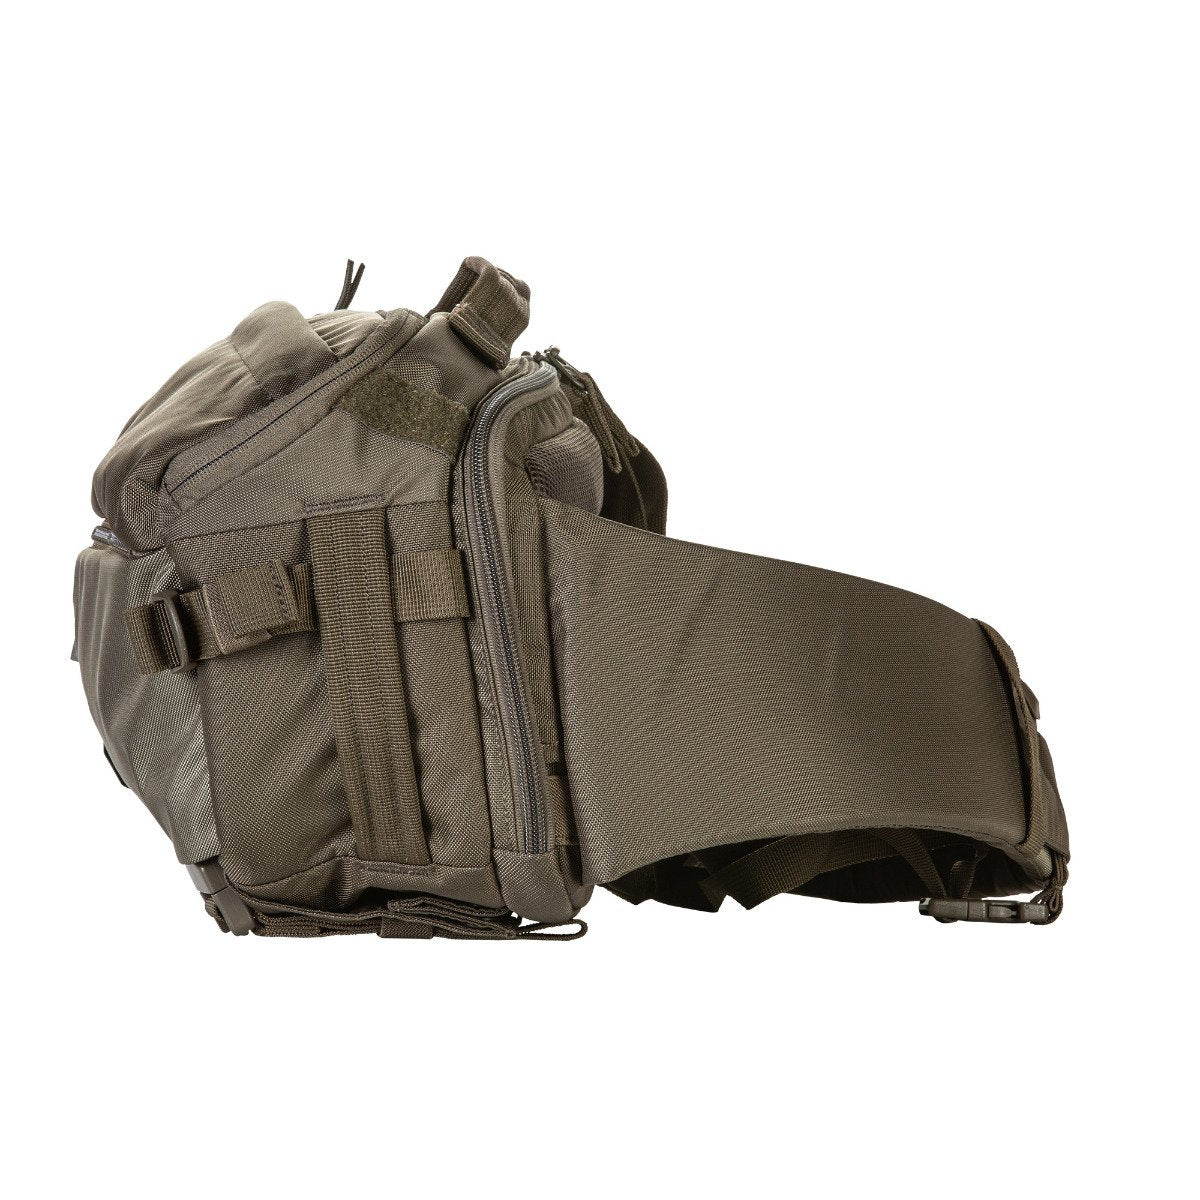 5.11 13L LV10 Sling Pack Tarmac 56437 Bags, Packs and Cases 5.11 Tactical Tactical Gear Supplier Tactical Distributors Australia